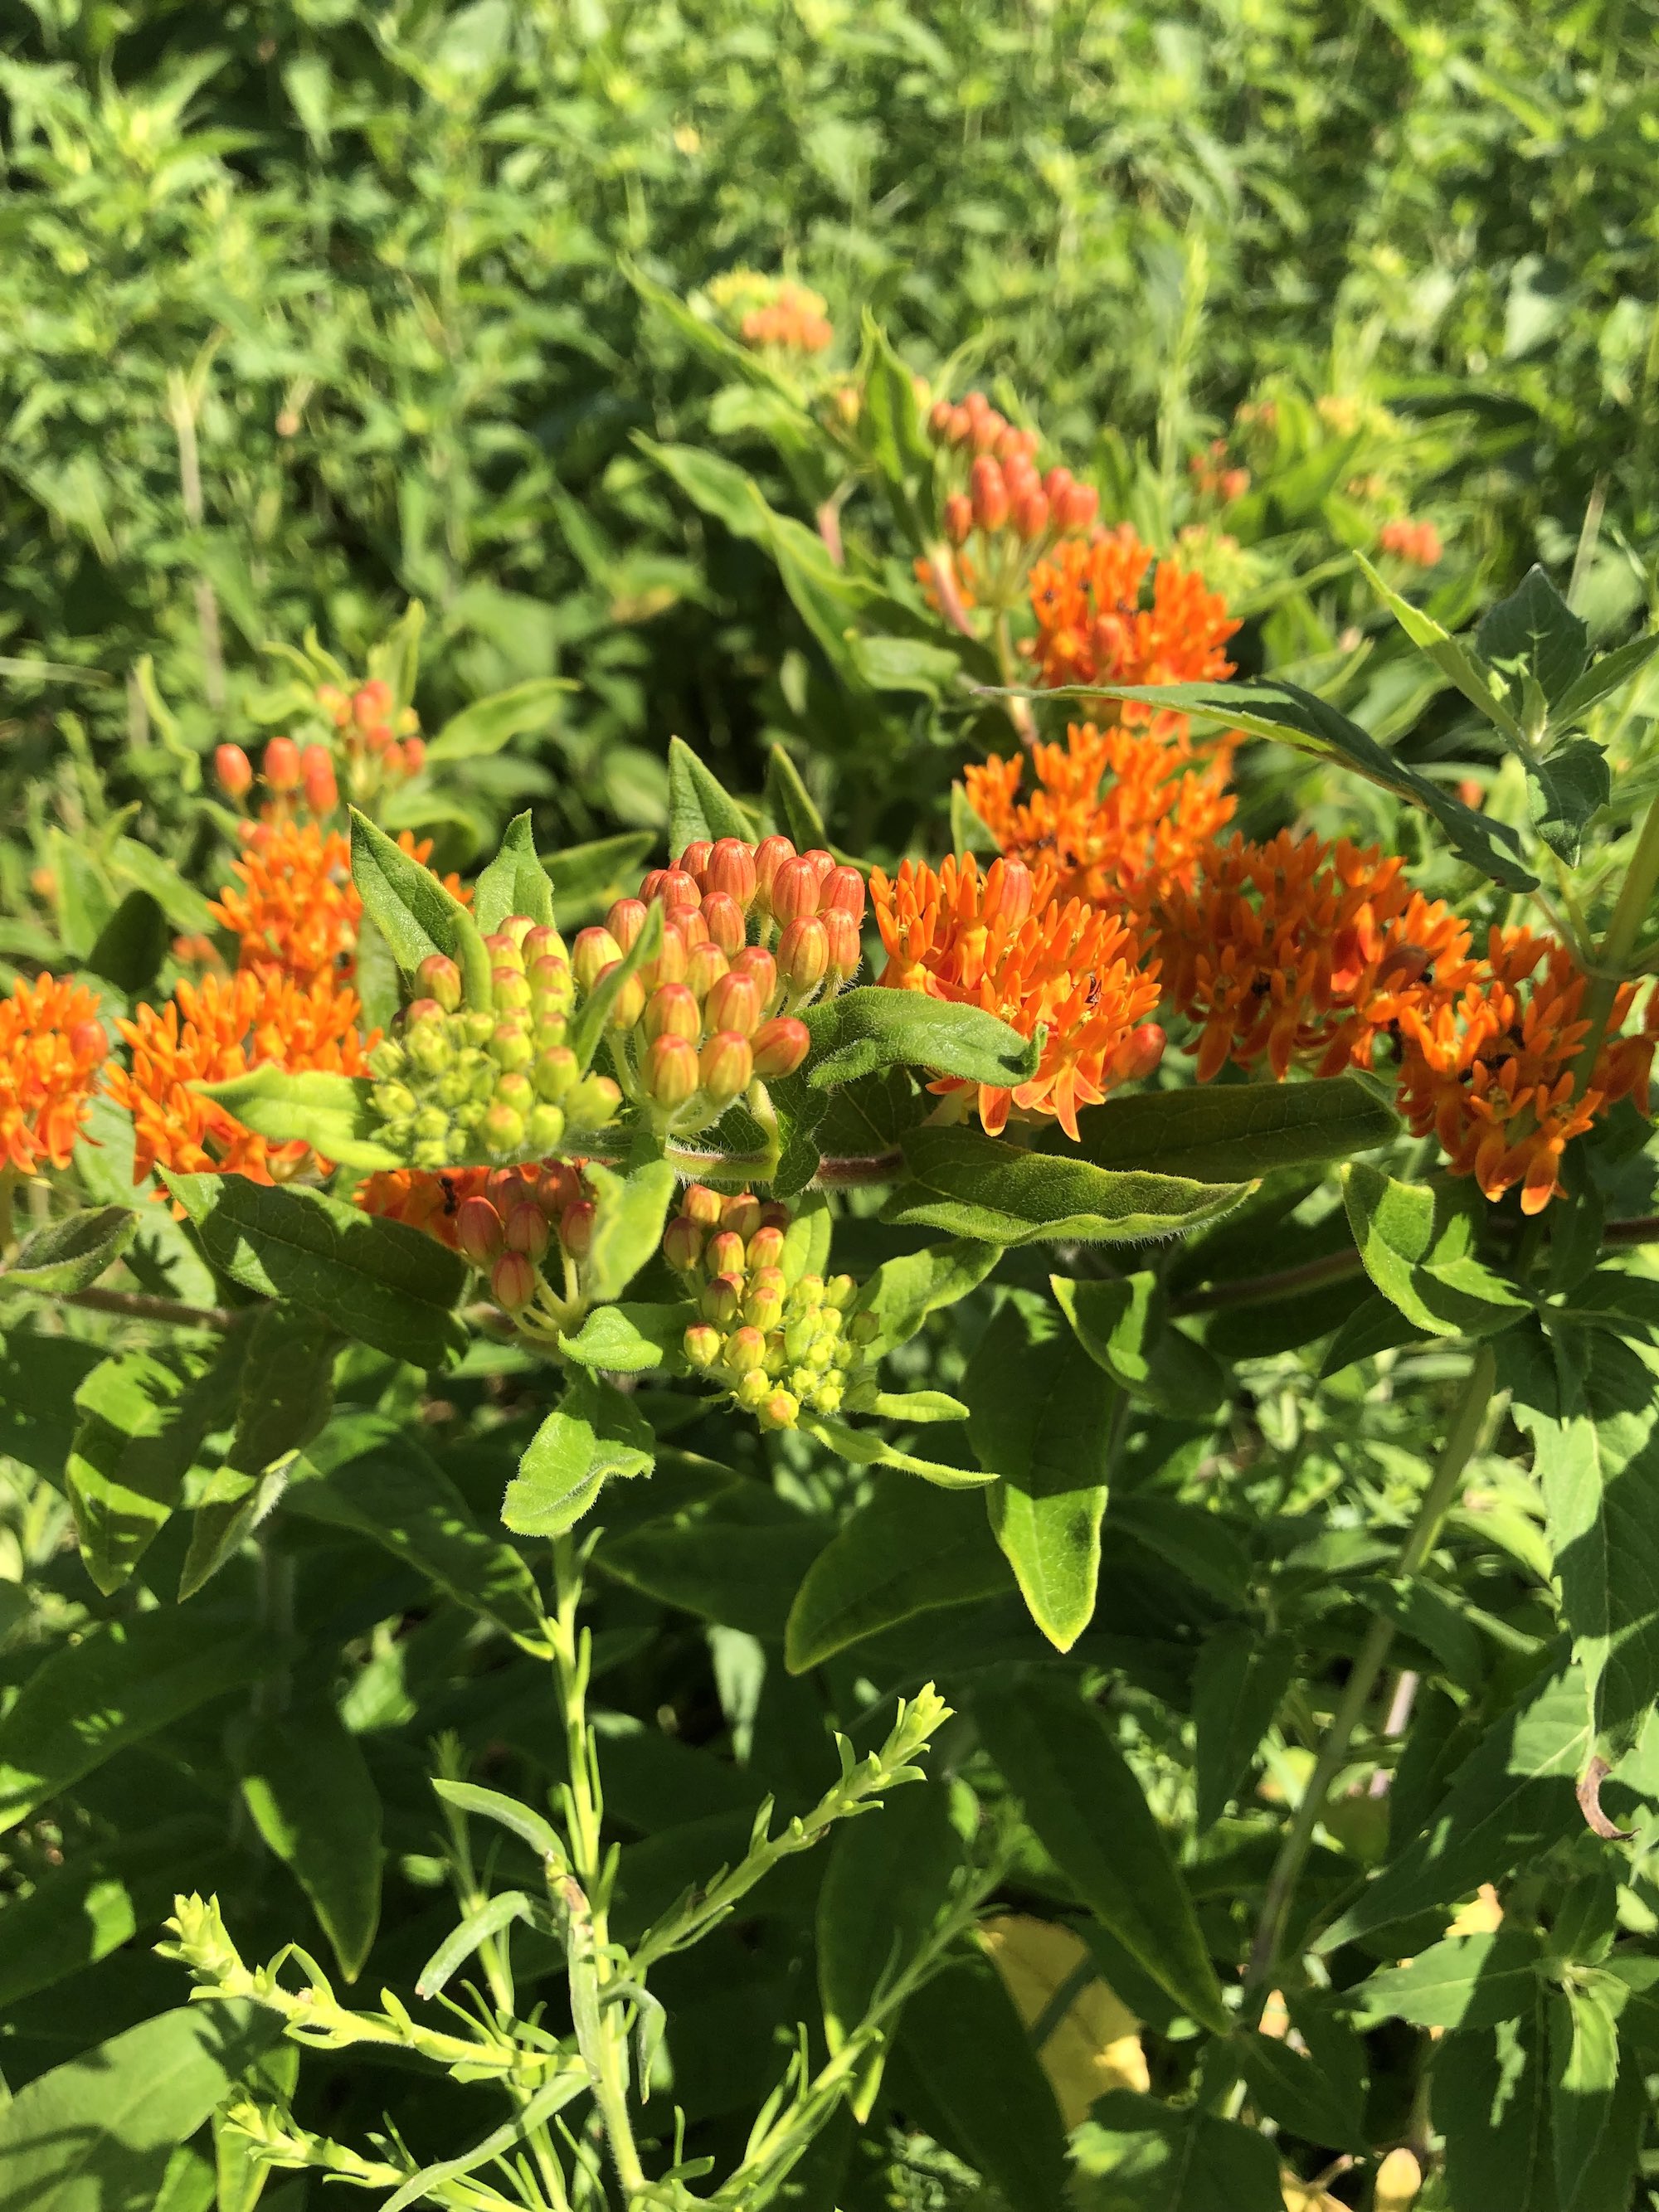 Butterfly Milkweed in UW Arboretum near Visitors Center in Madison, Wisconsin on June 16, 2021.